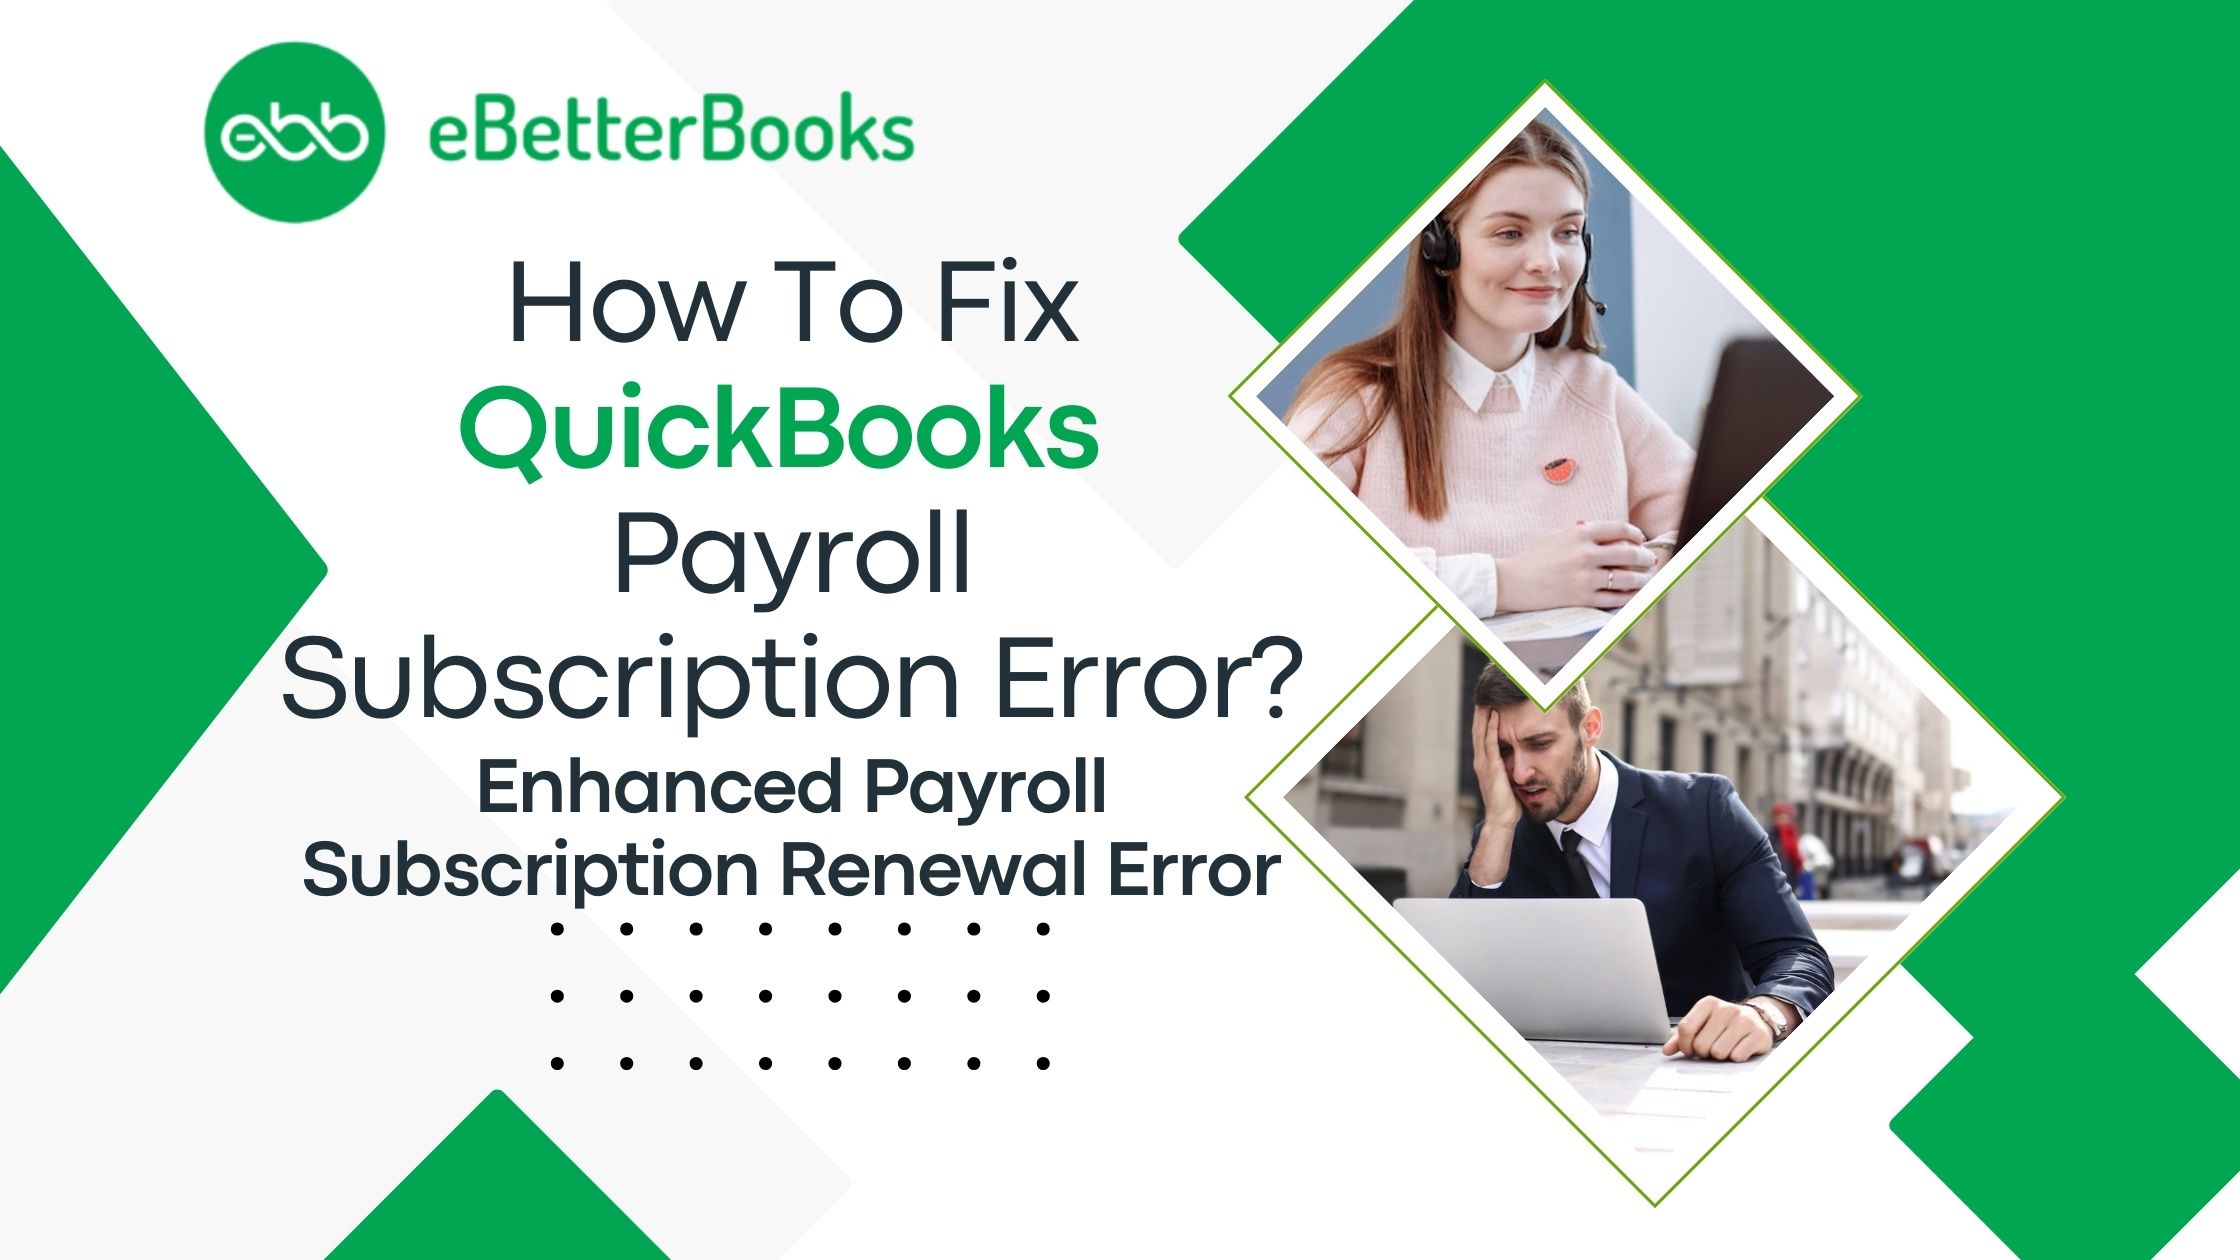 QuickBooks Payroll Subscription Enhanced Payroll Subscription Renewal Error